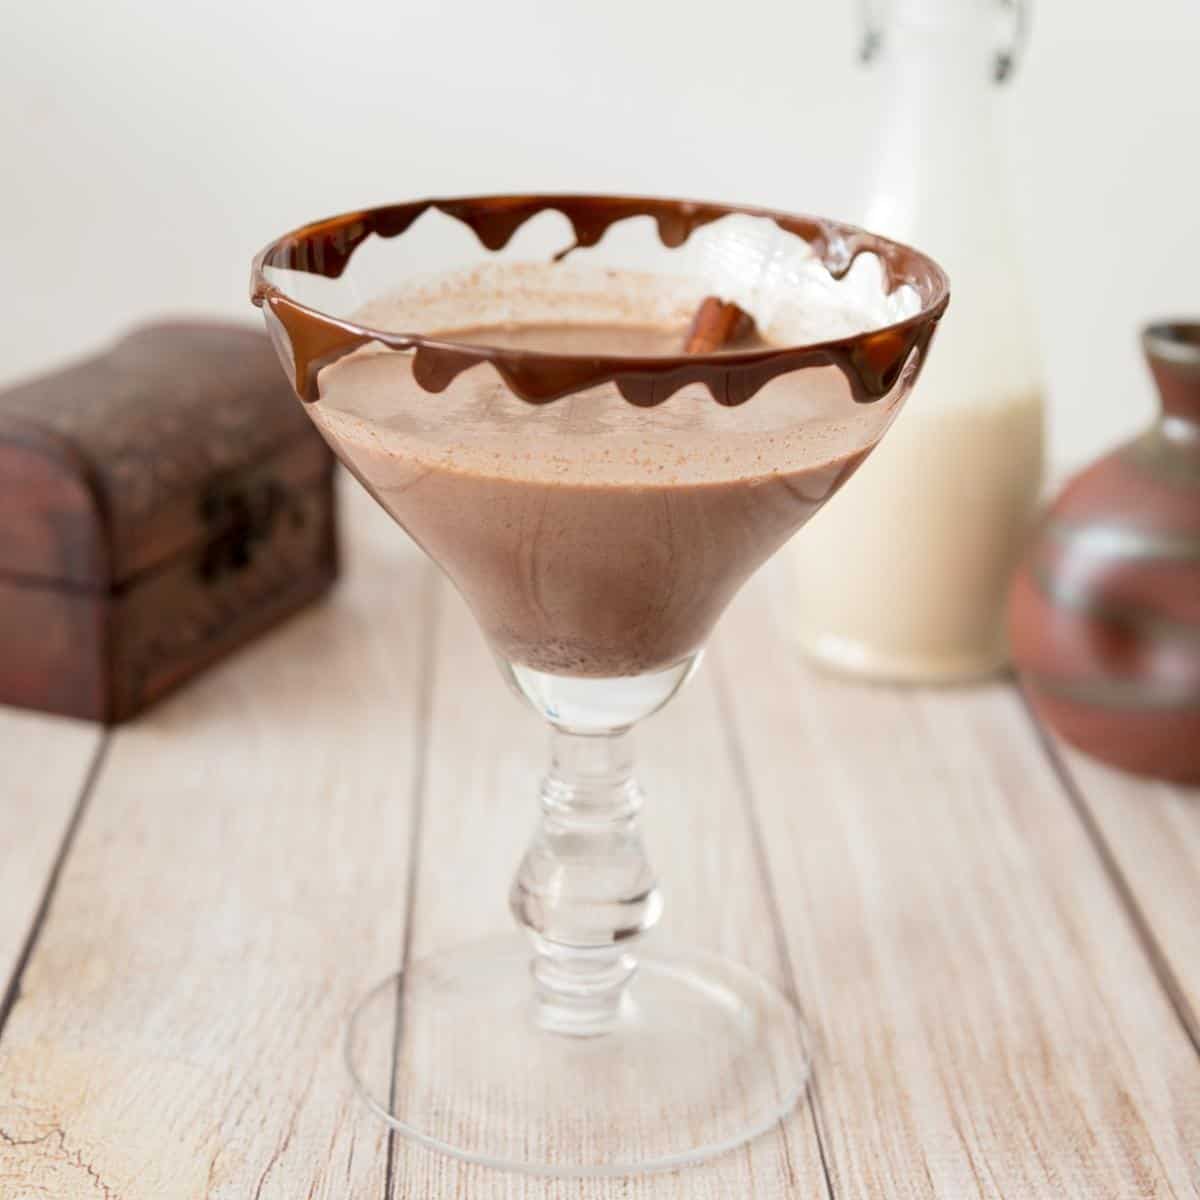 A martini glass with chocolate martini